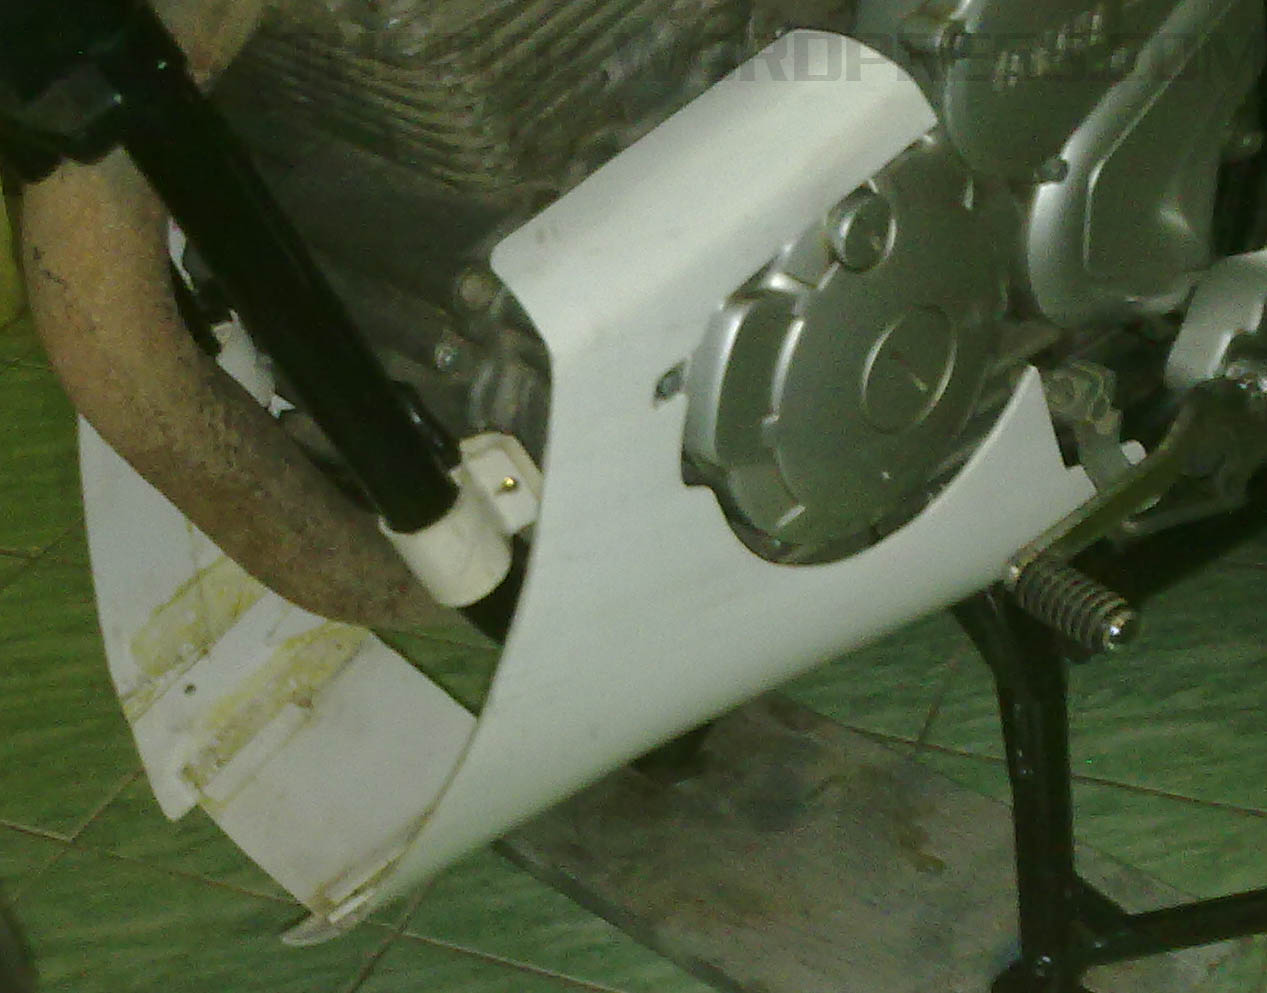 Share Membuat Cover Engine Undercowl Motor Dengan Pipa Paralon PVC